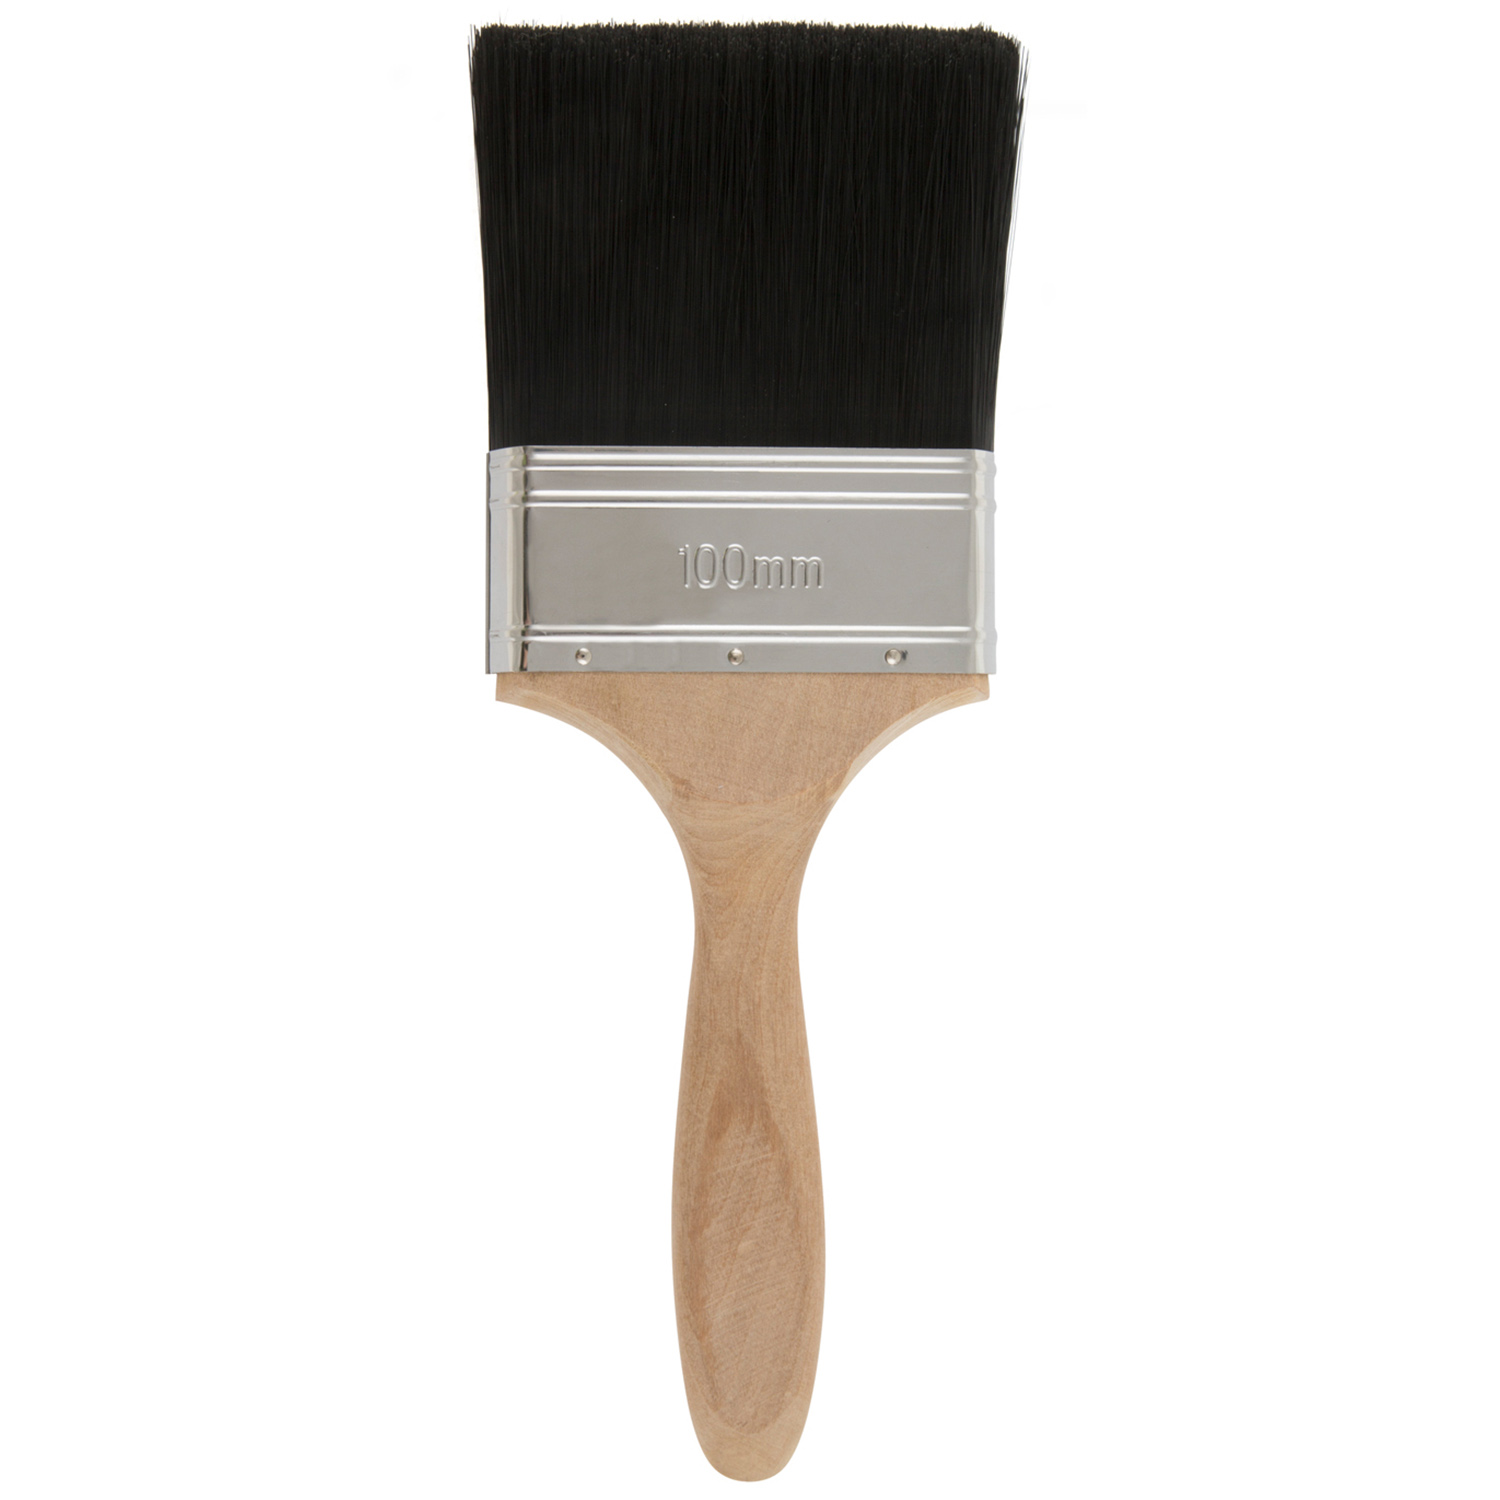 Prepare It 4 inch Professional Paint Brush Image 1